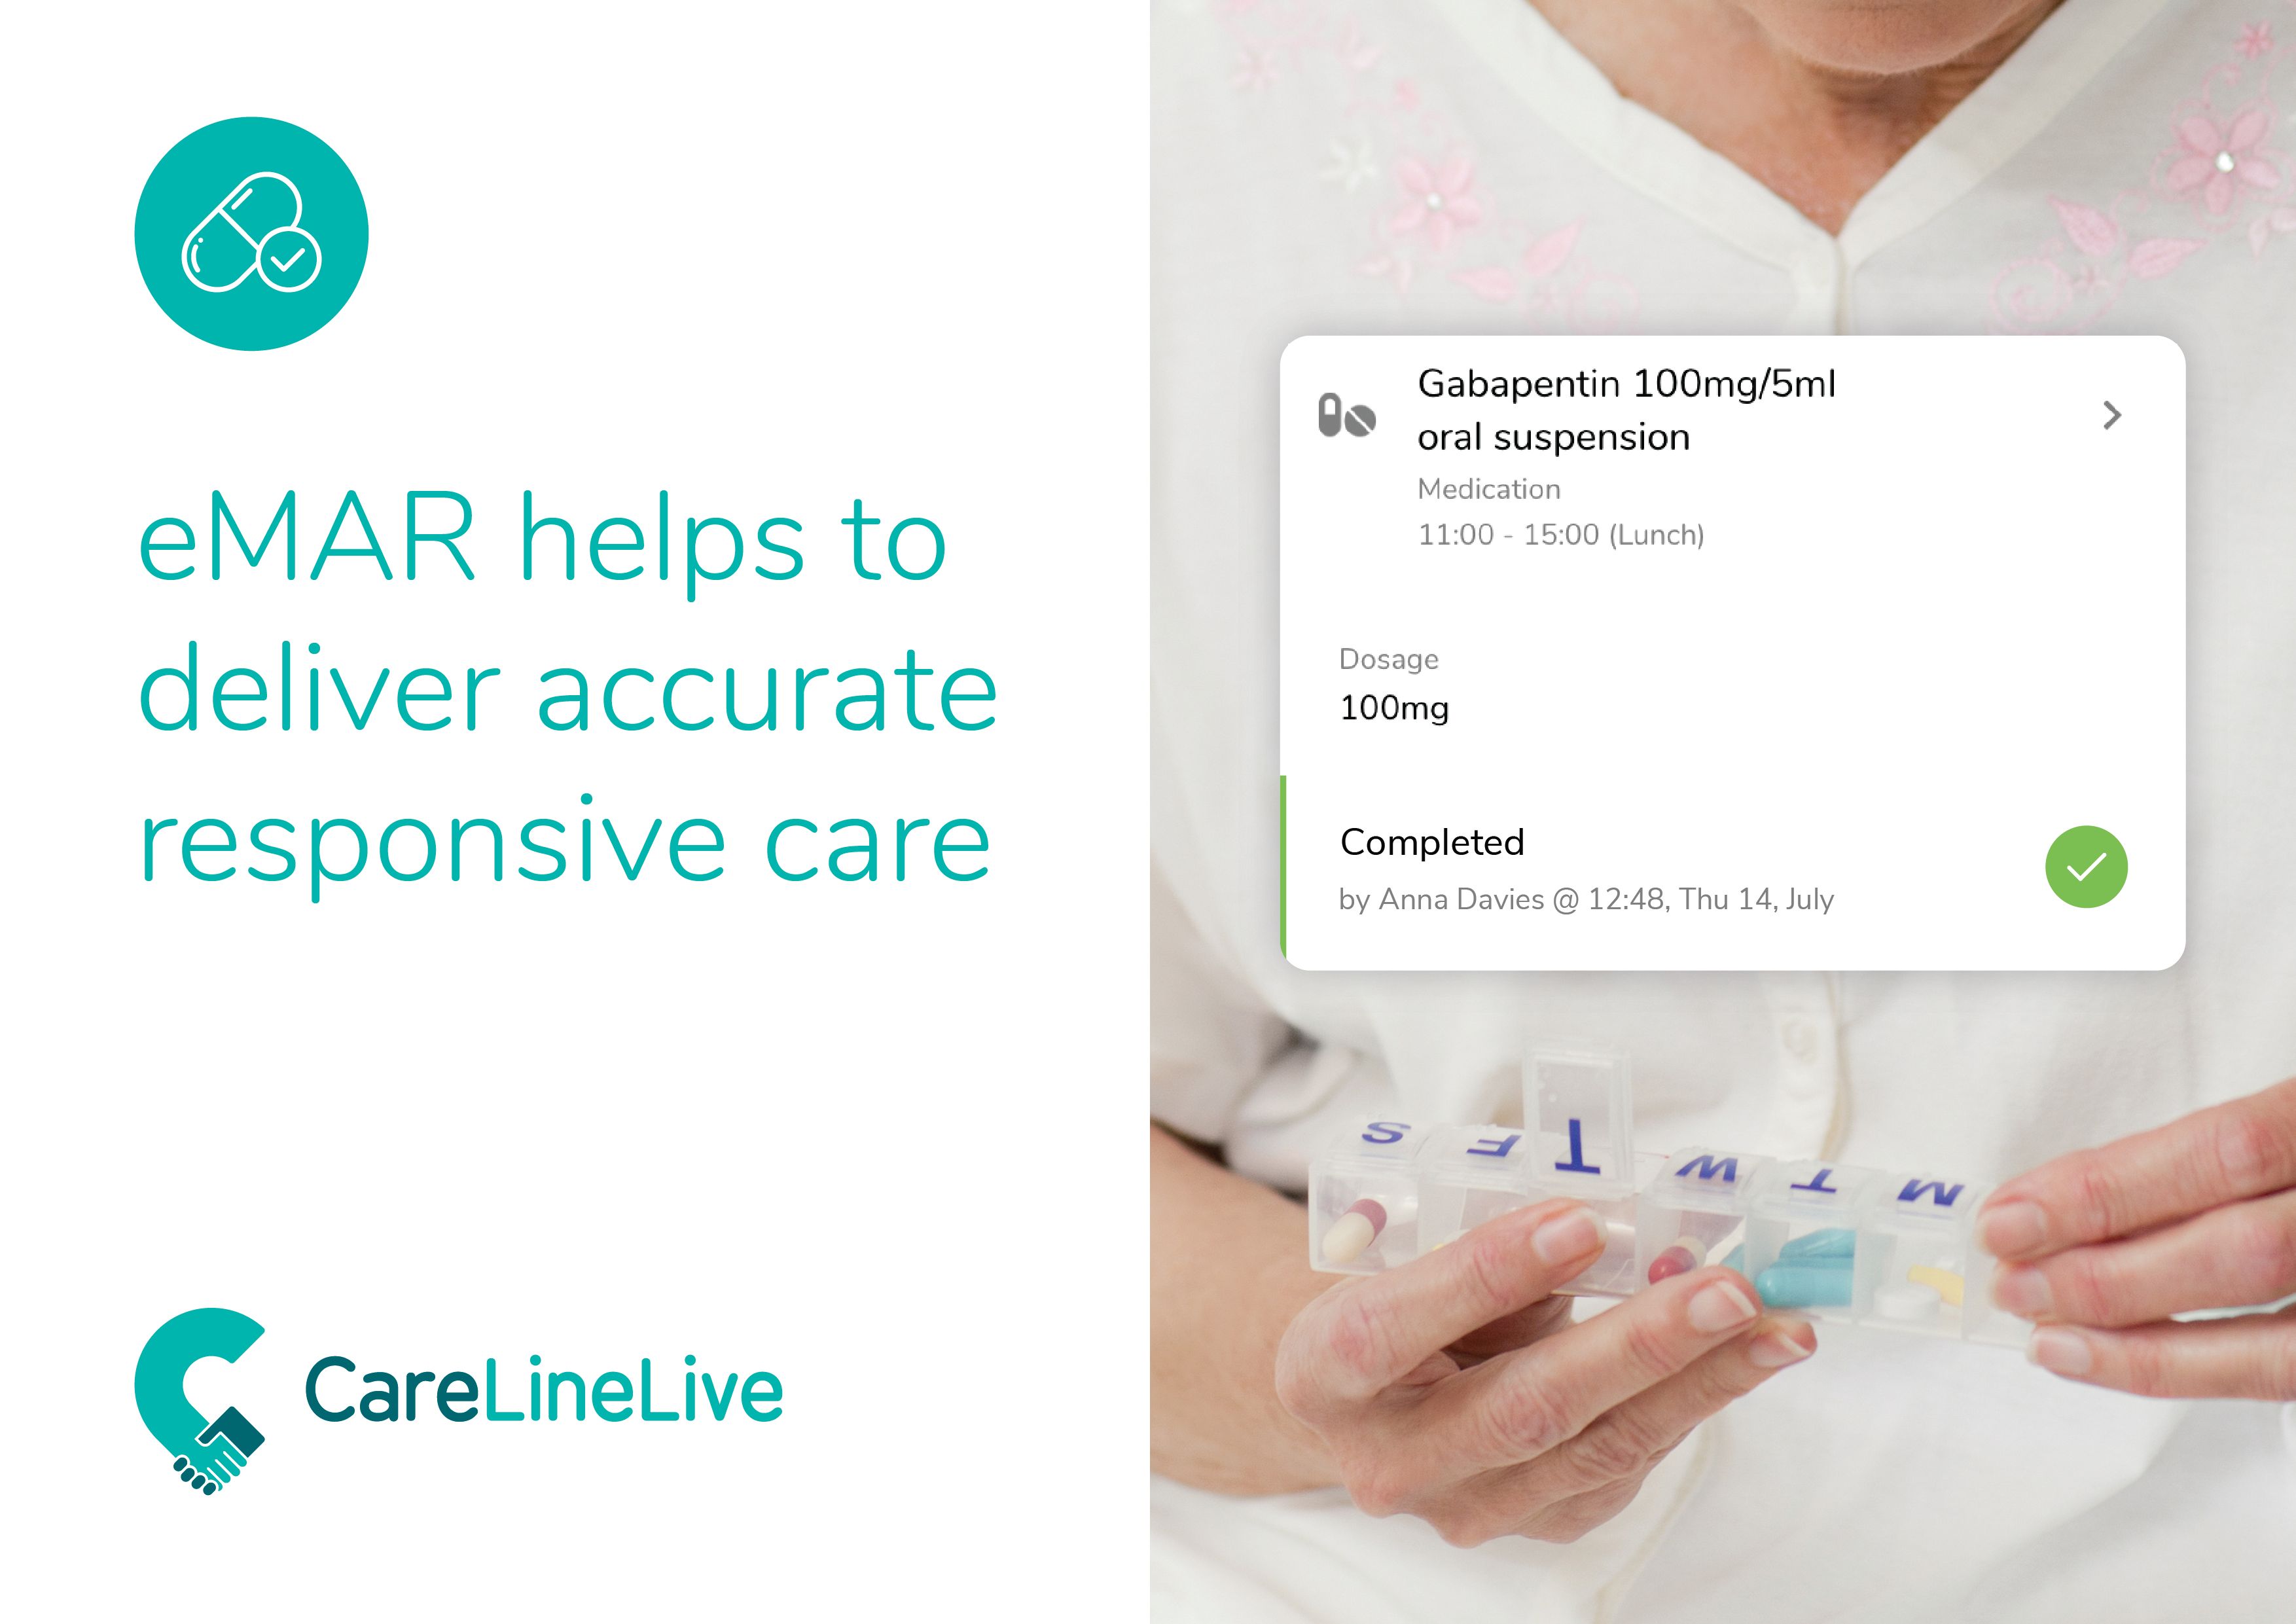 CareLineLive Improves Communication and helps deliver better care